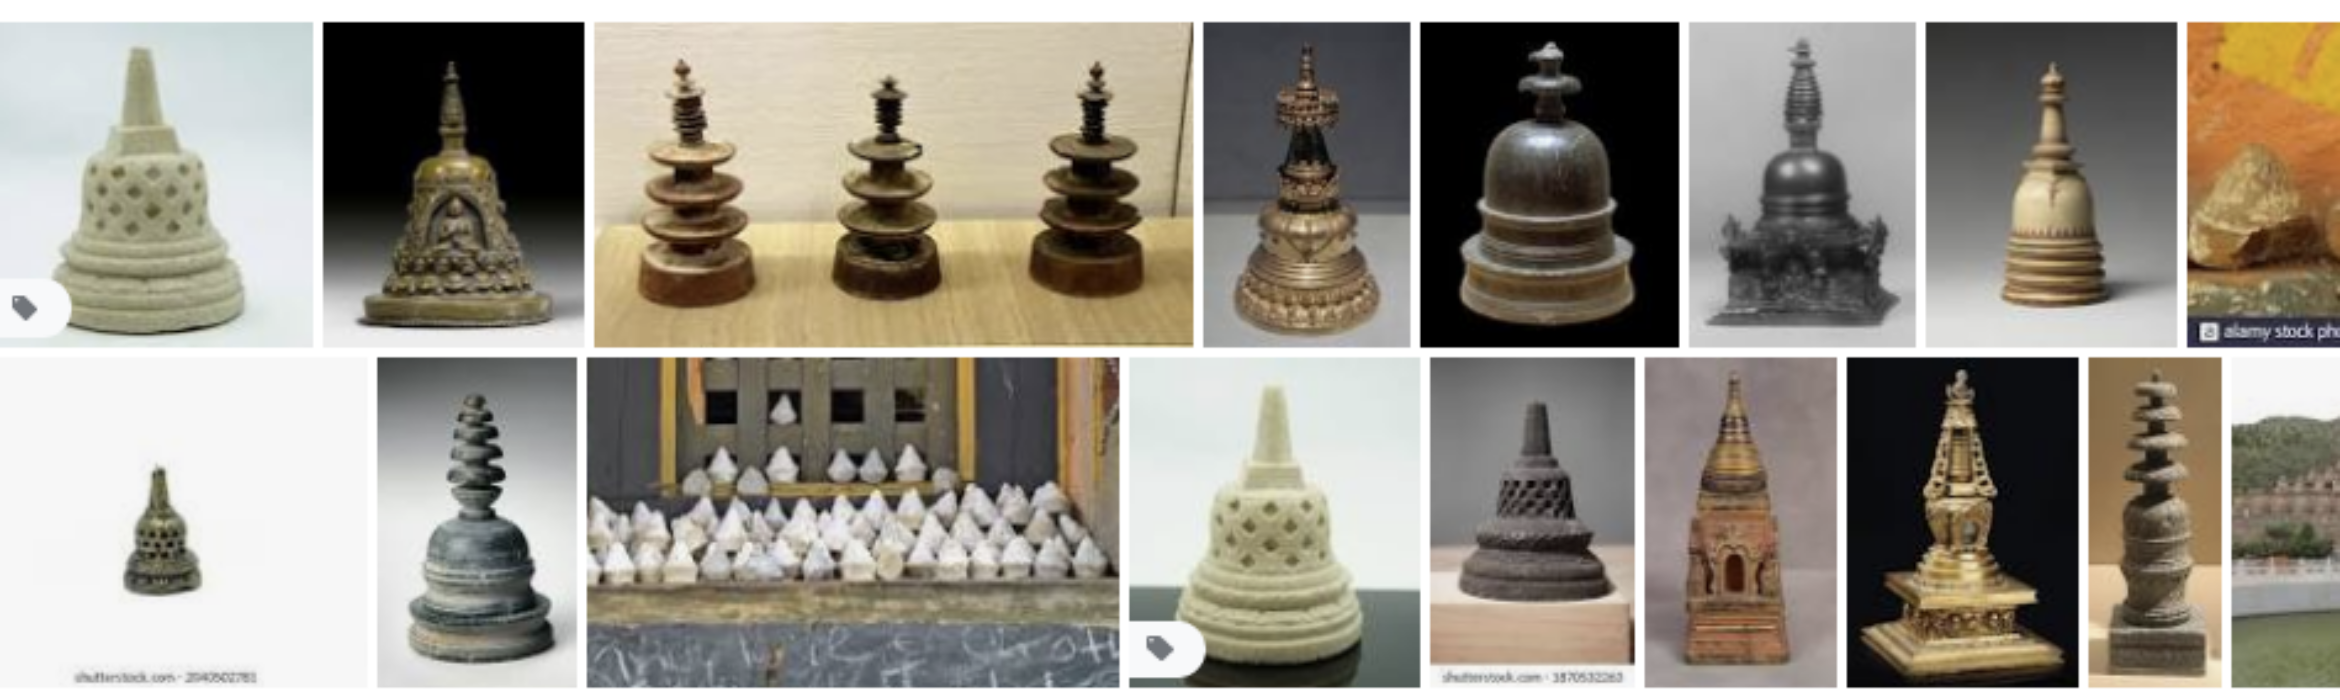 Call for Submissions: Temple University Miniature Stupa Design Contest 天普大学小型佛塔设计比赛